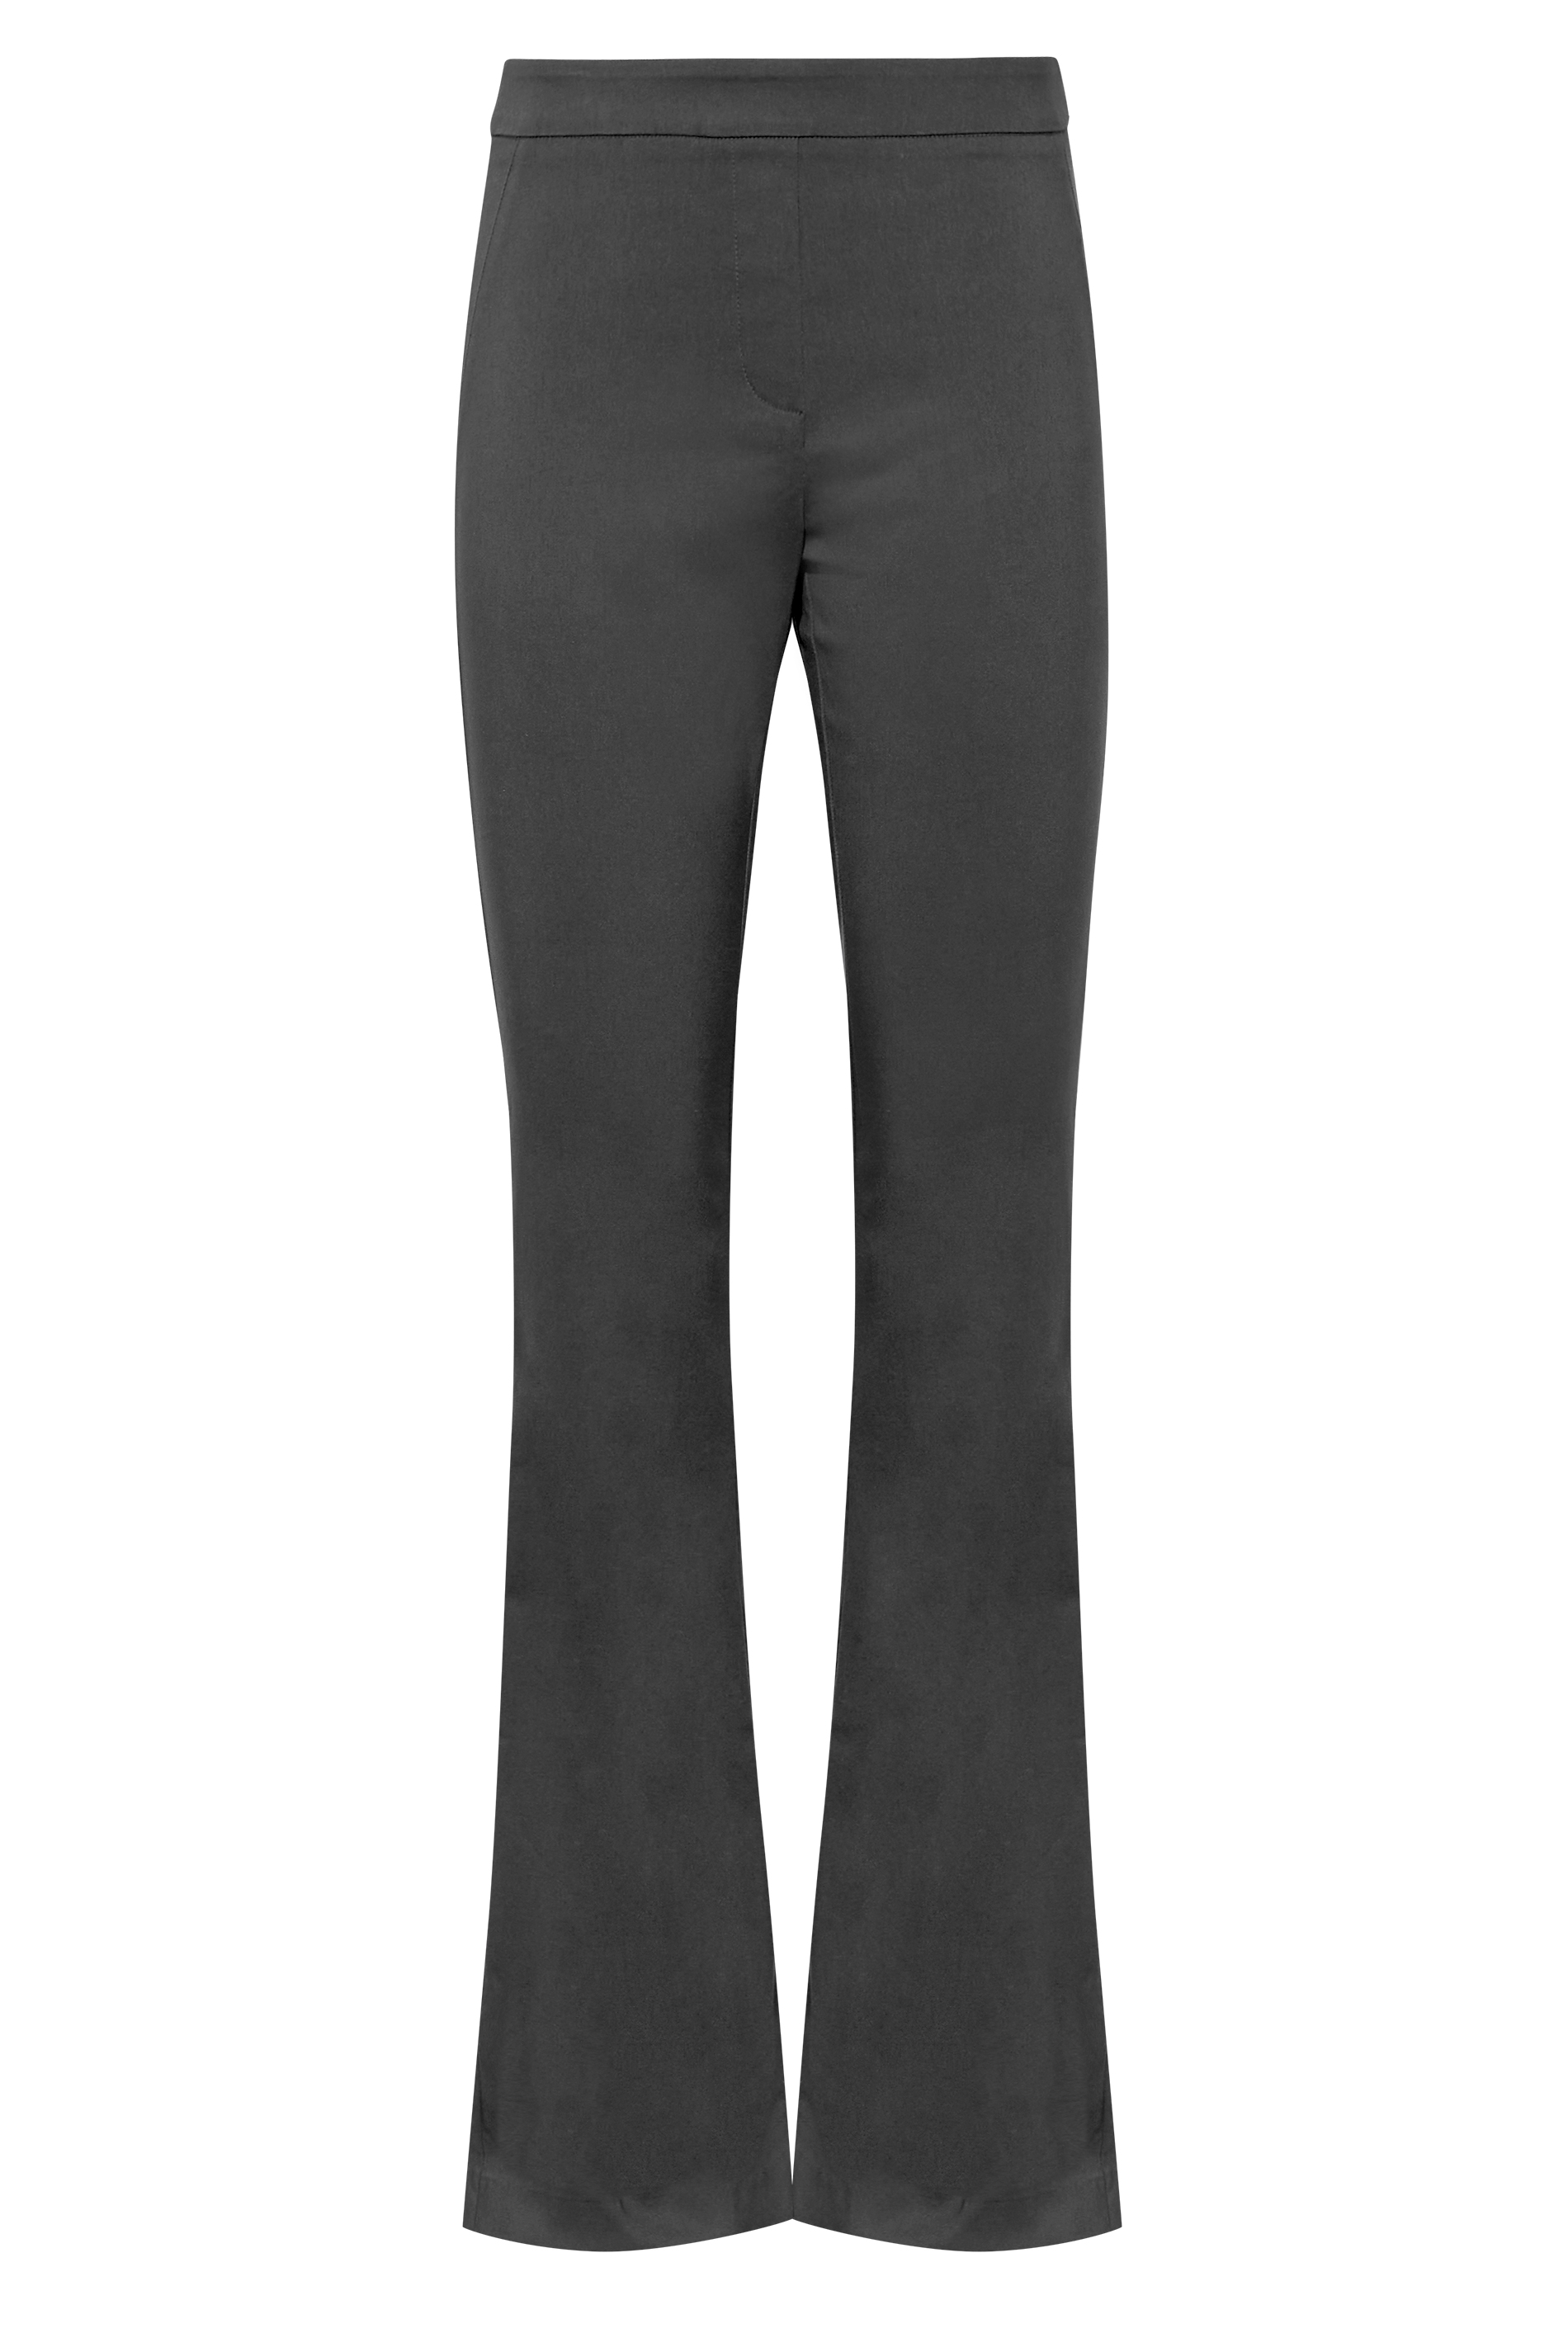 LTS Tall Women's Grey Bi Stretch Bootcut Trousers